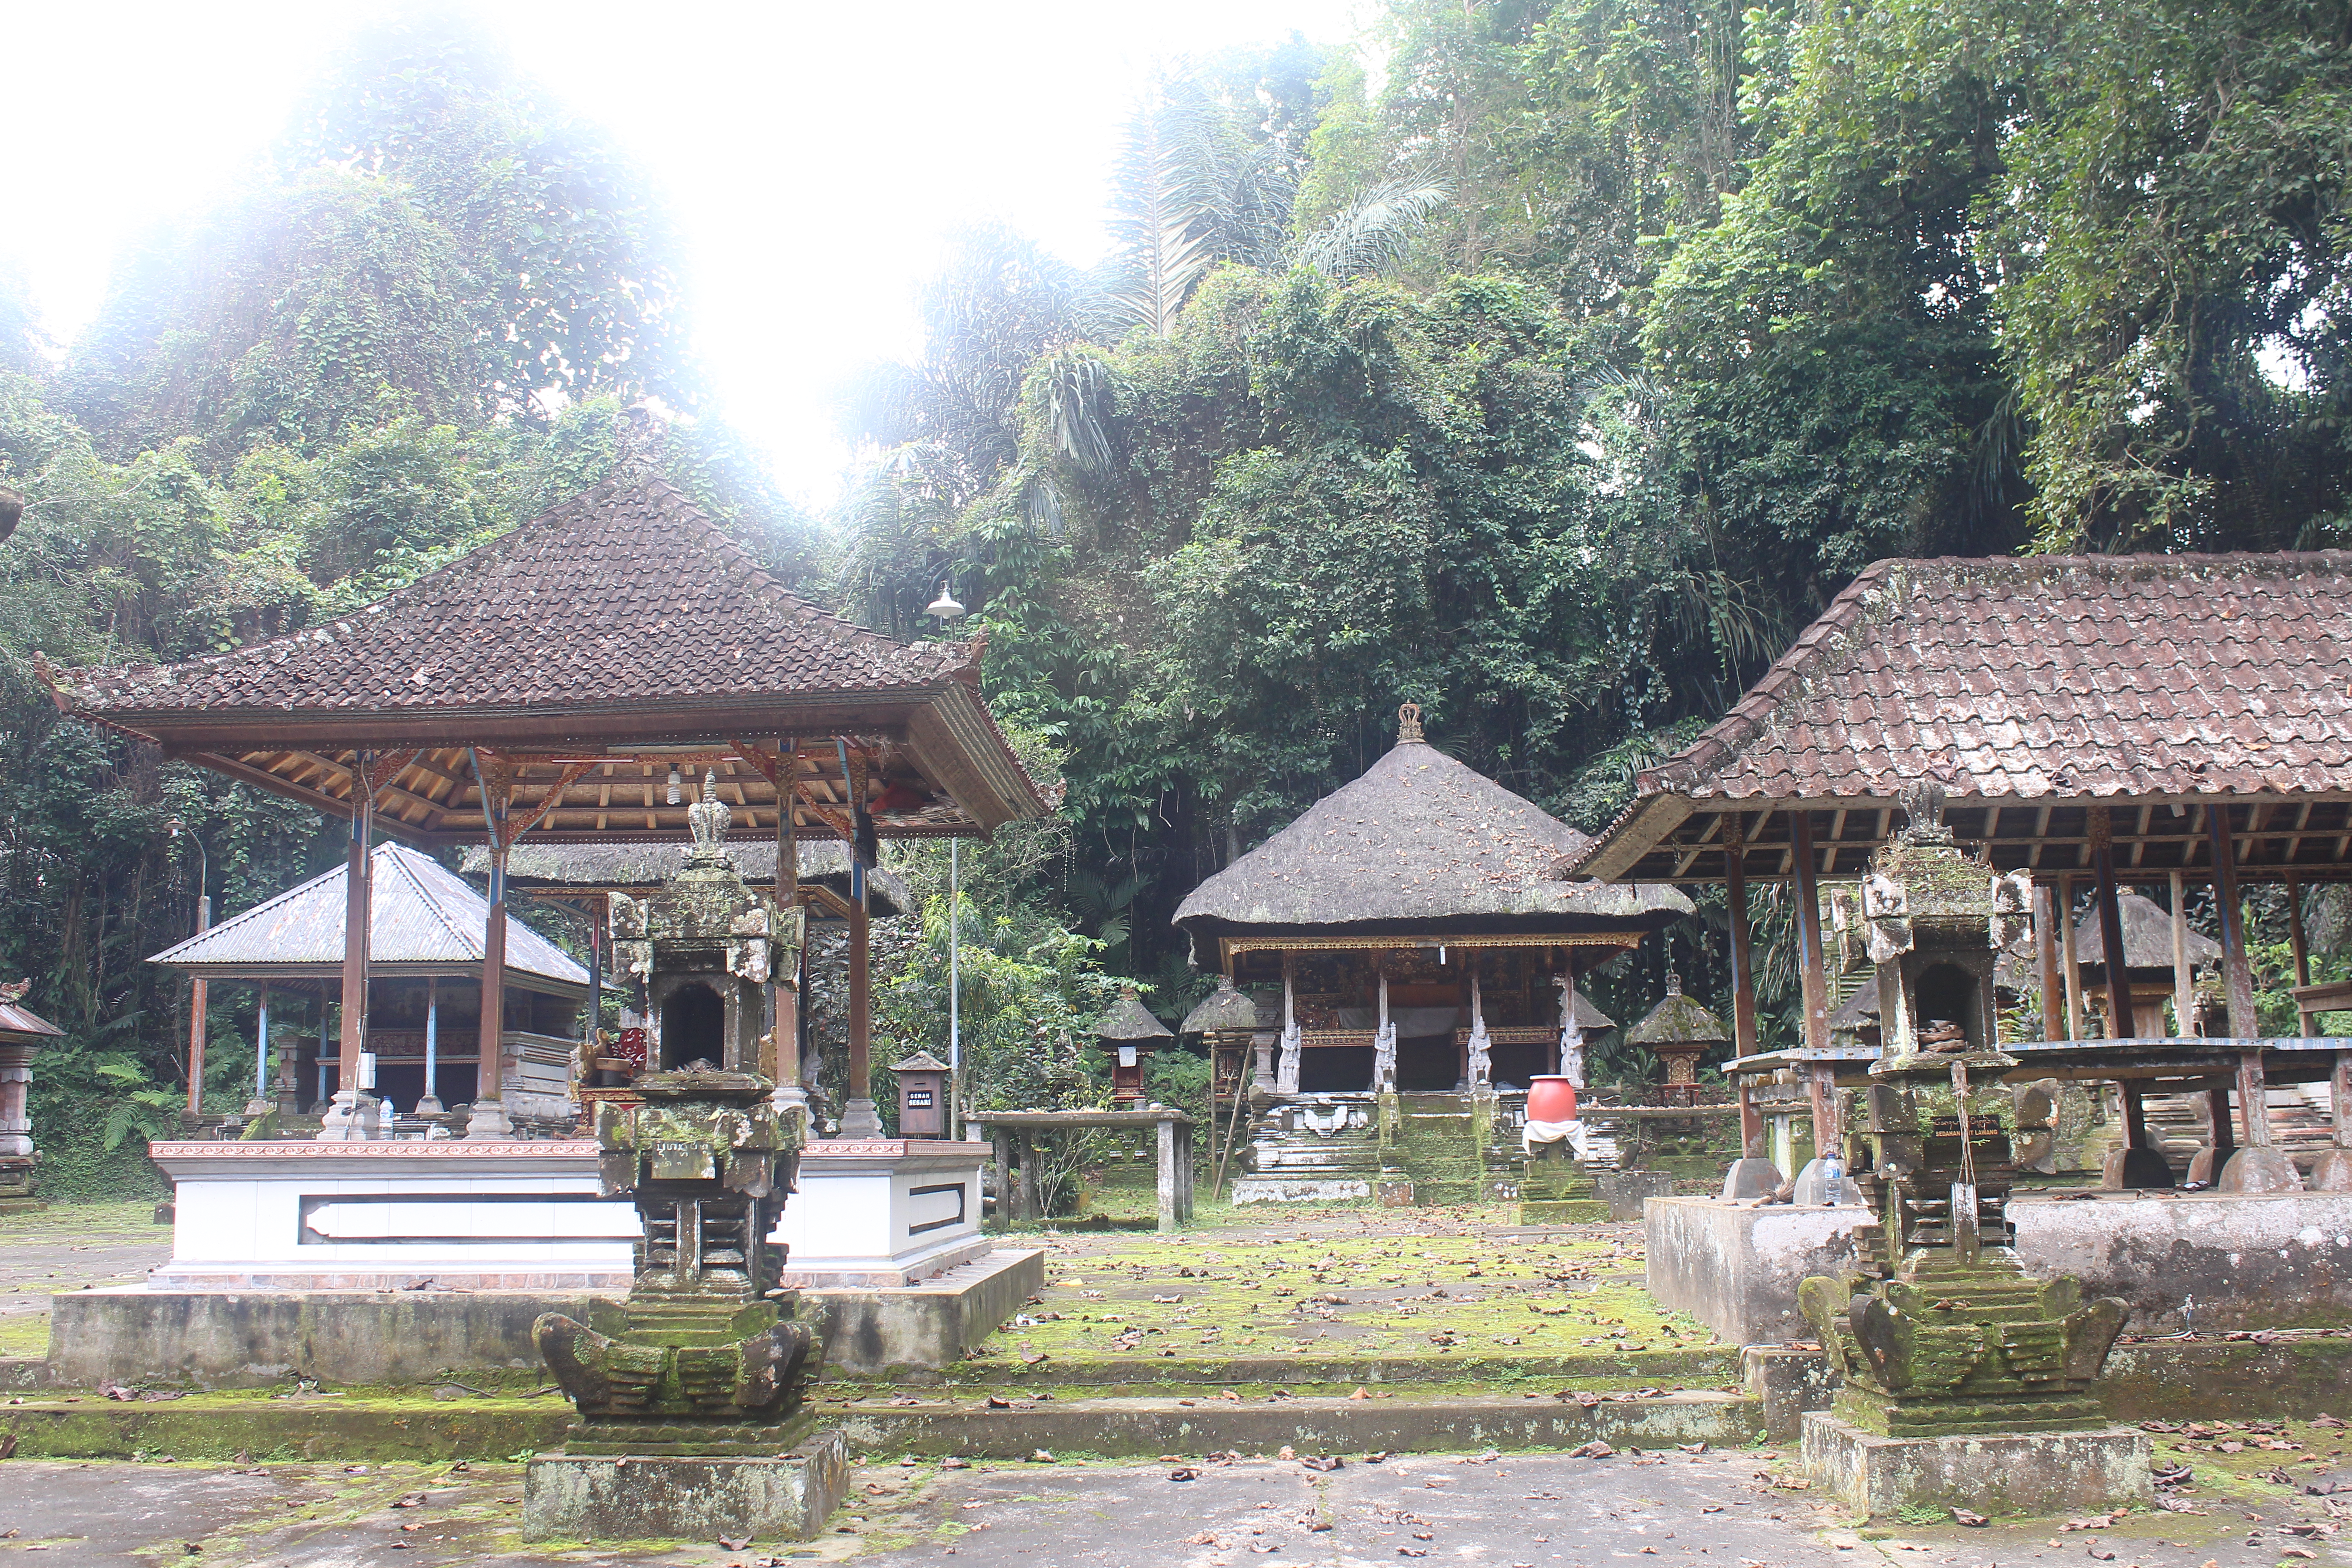 Overgrown temple complex